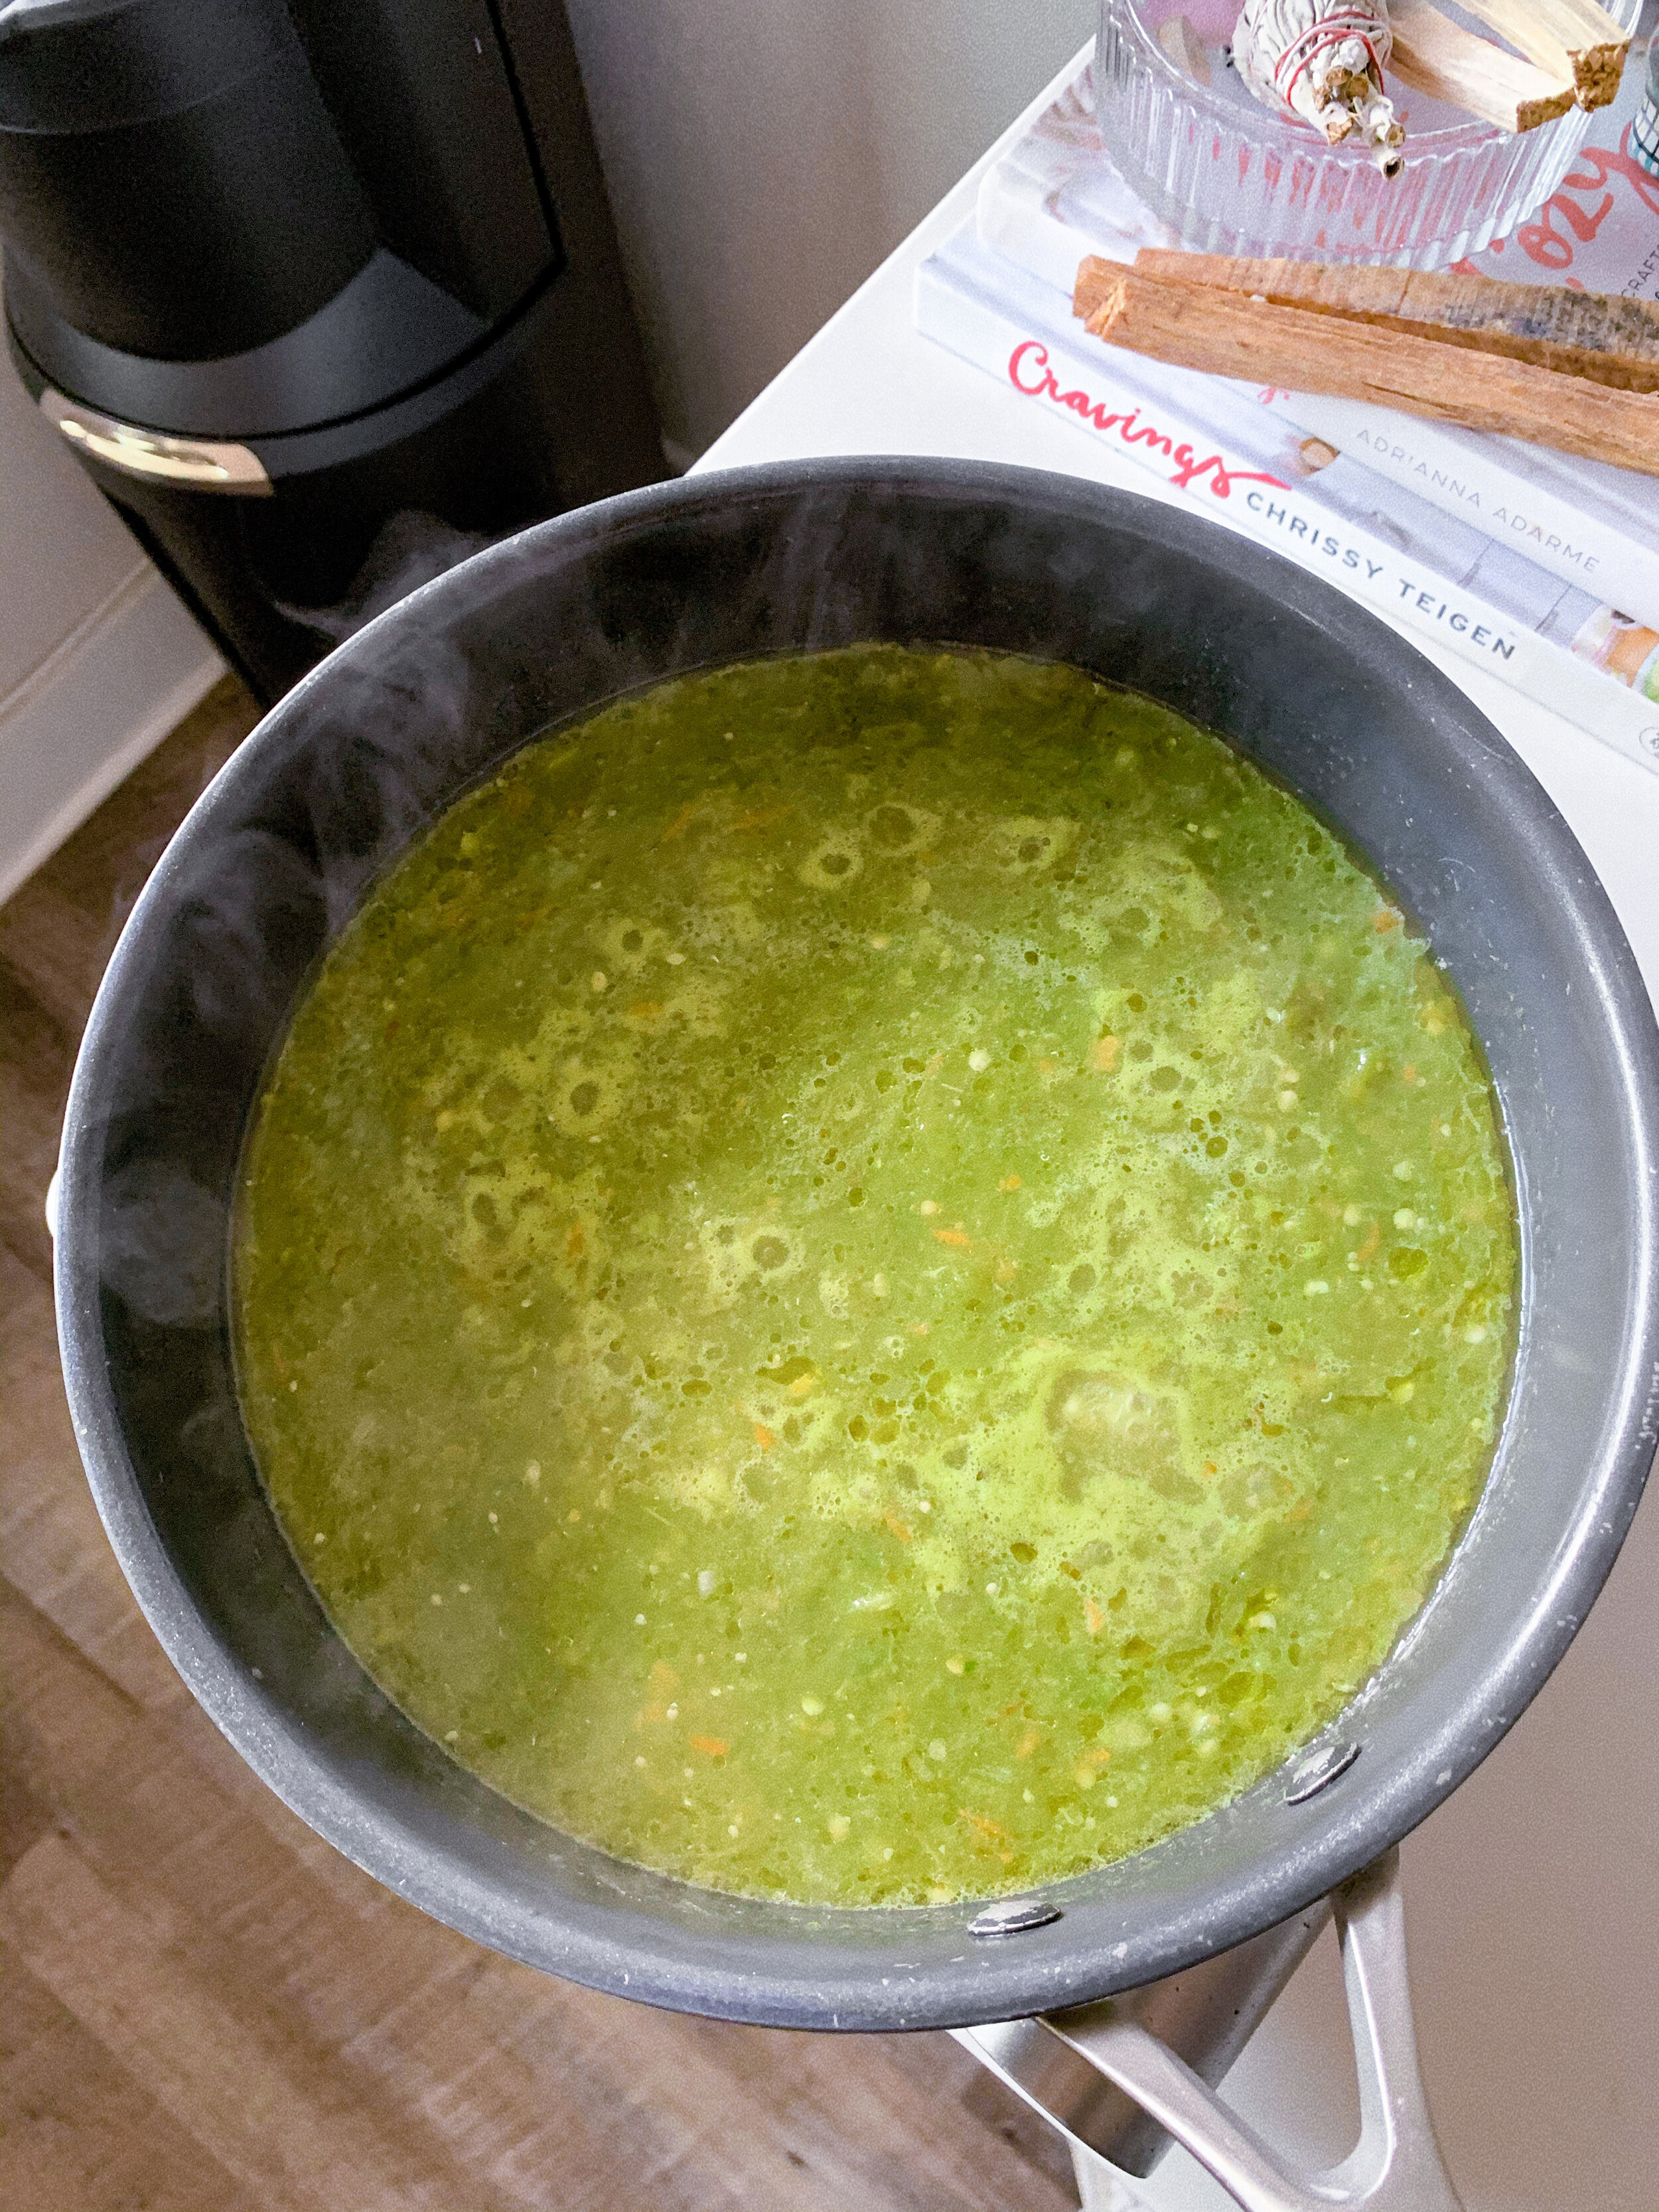 Frying the salsa verde in a saucepan